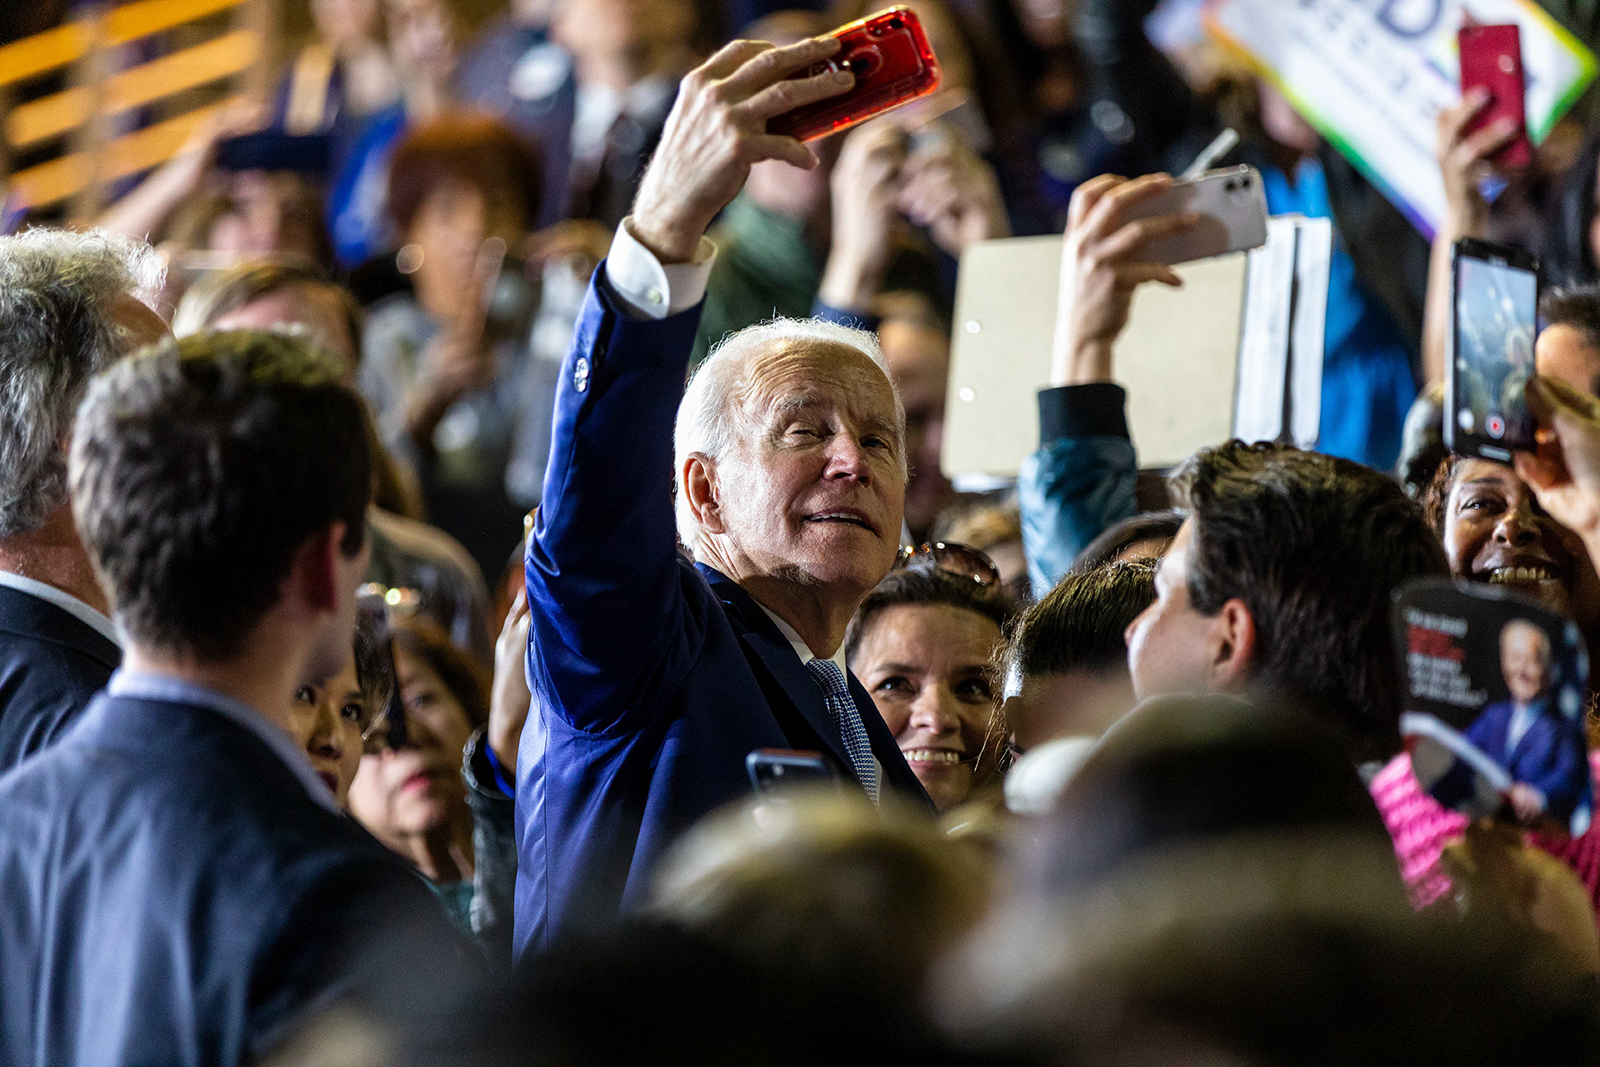 Joe Biden clinches Democratic presidential nomination - Los Angeles Times